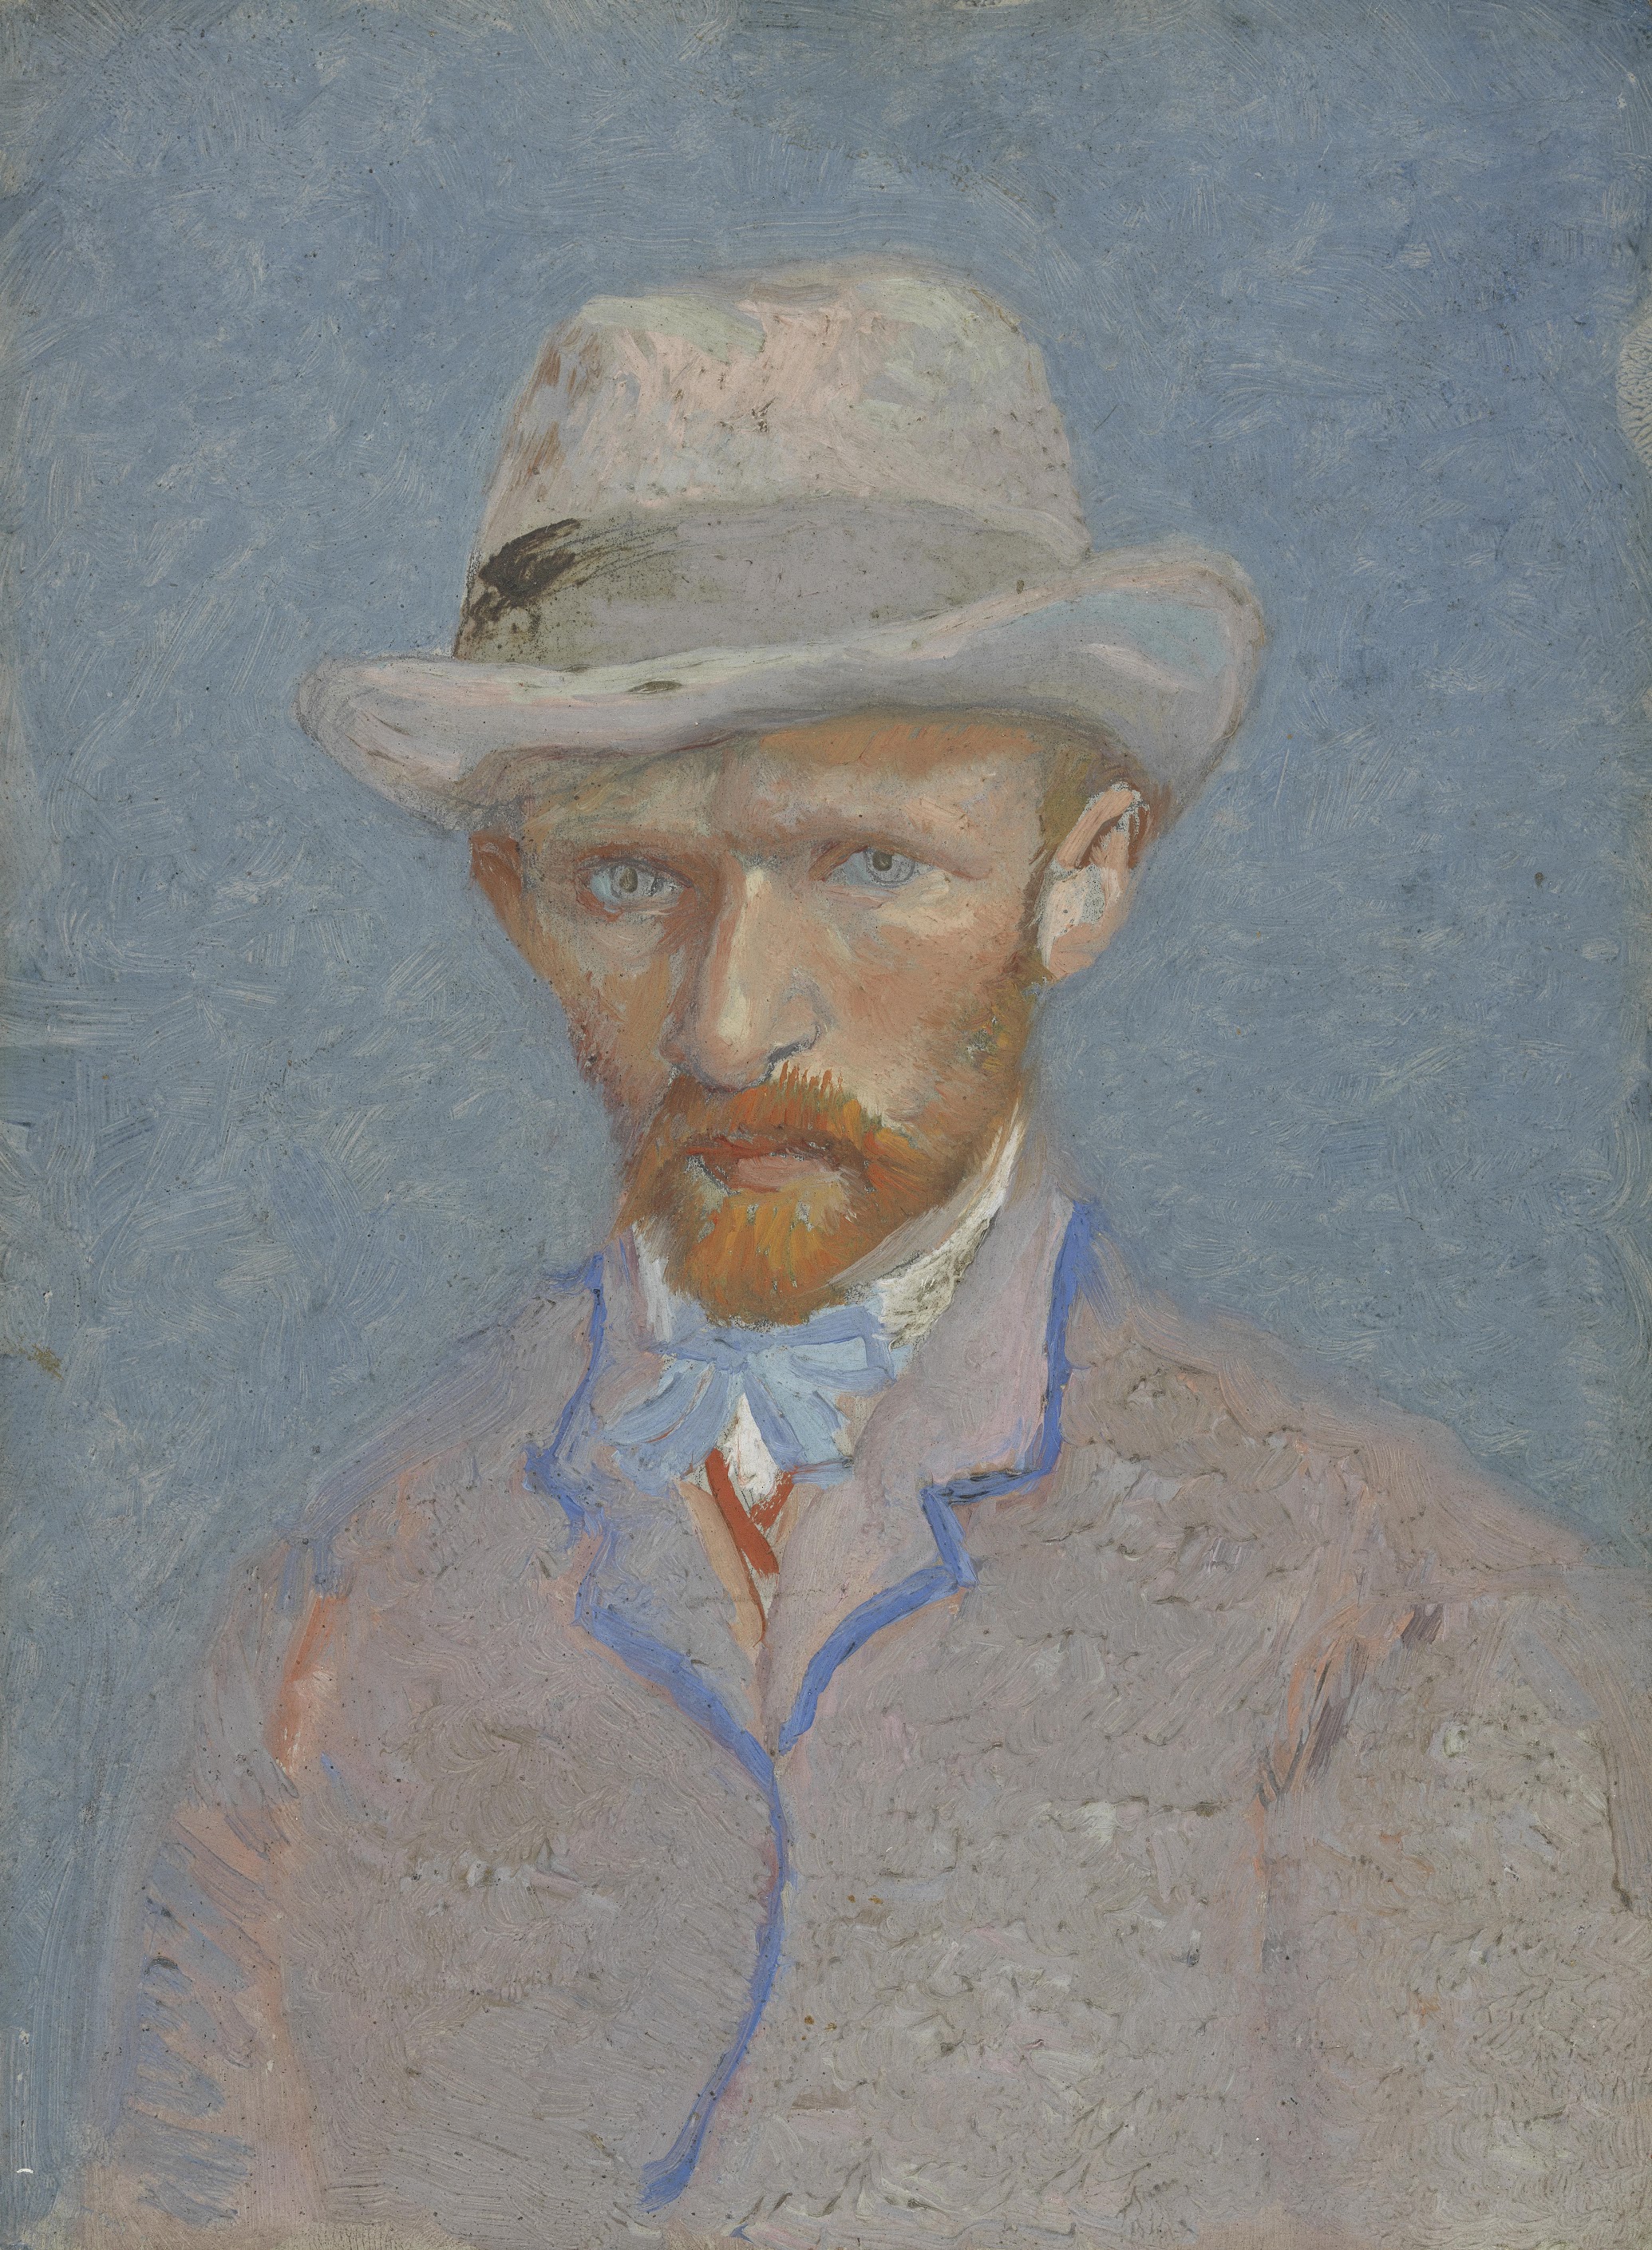 自畫像 by Vincent van Gogh - 1887年夏 - 19.0 cm x 14.1 cm 